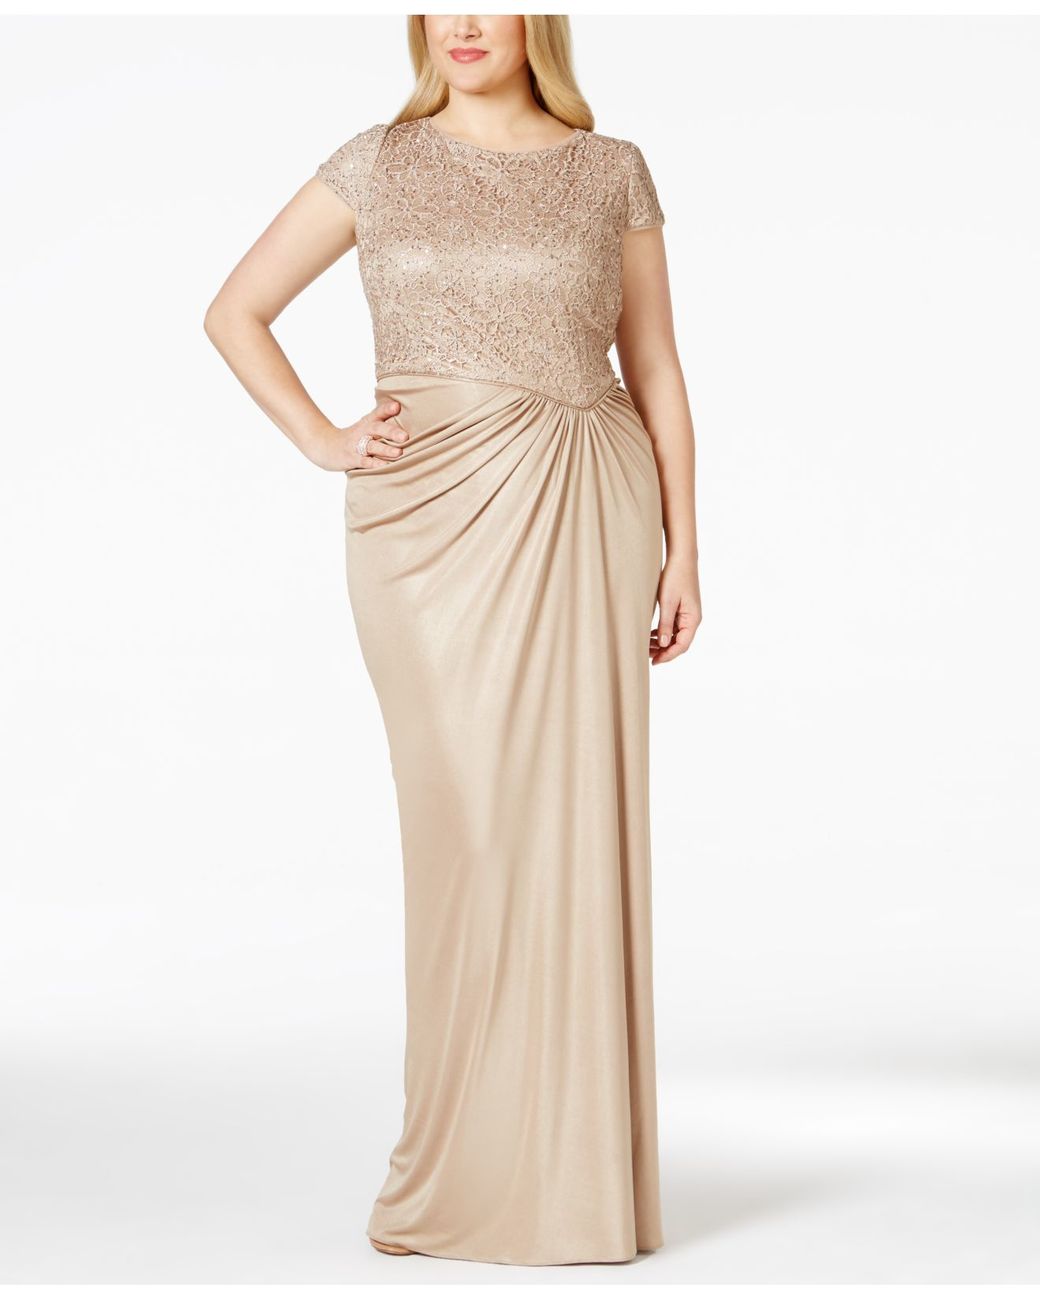 arrojar polvo en los ojos costilla Imbécil Adrianna Papell Plus Size Embellished Lace Ruched Dress in Metallic | Lyst